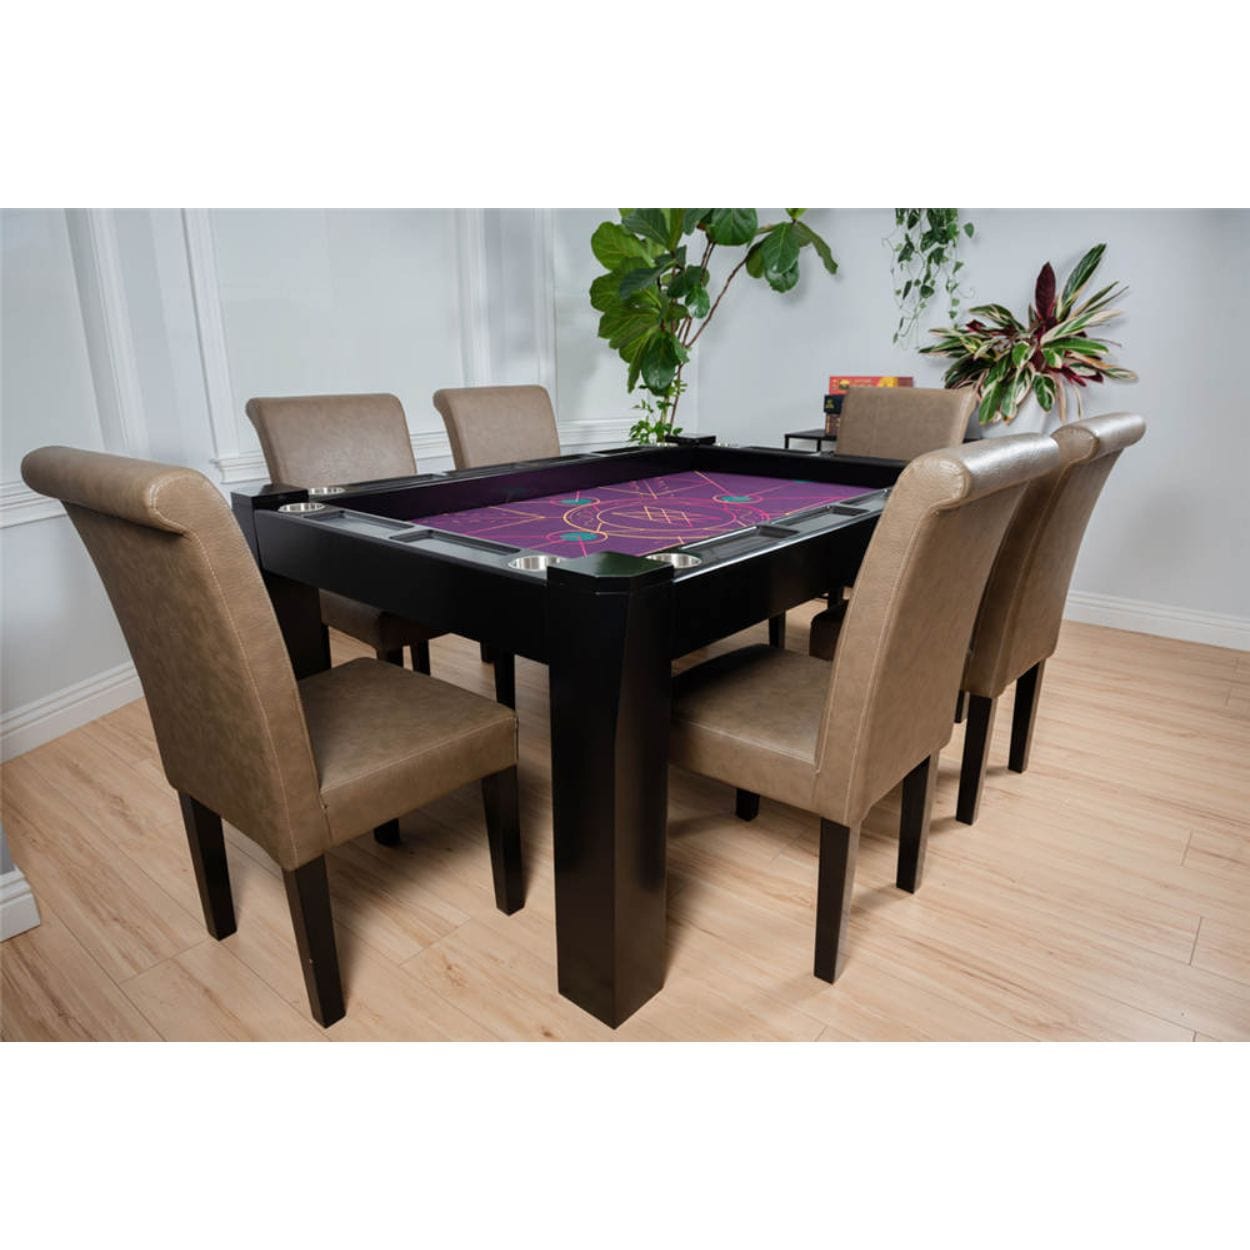 BBO Poker Tables The Origins Game Table [PRE-ORDER]